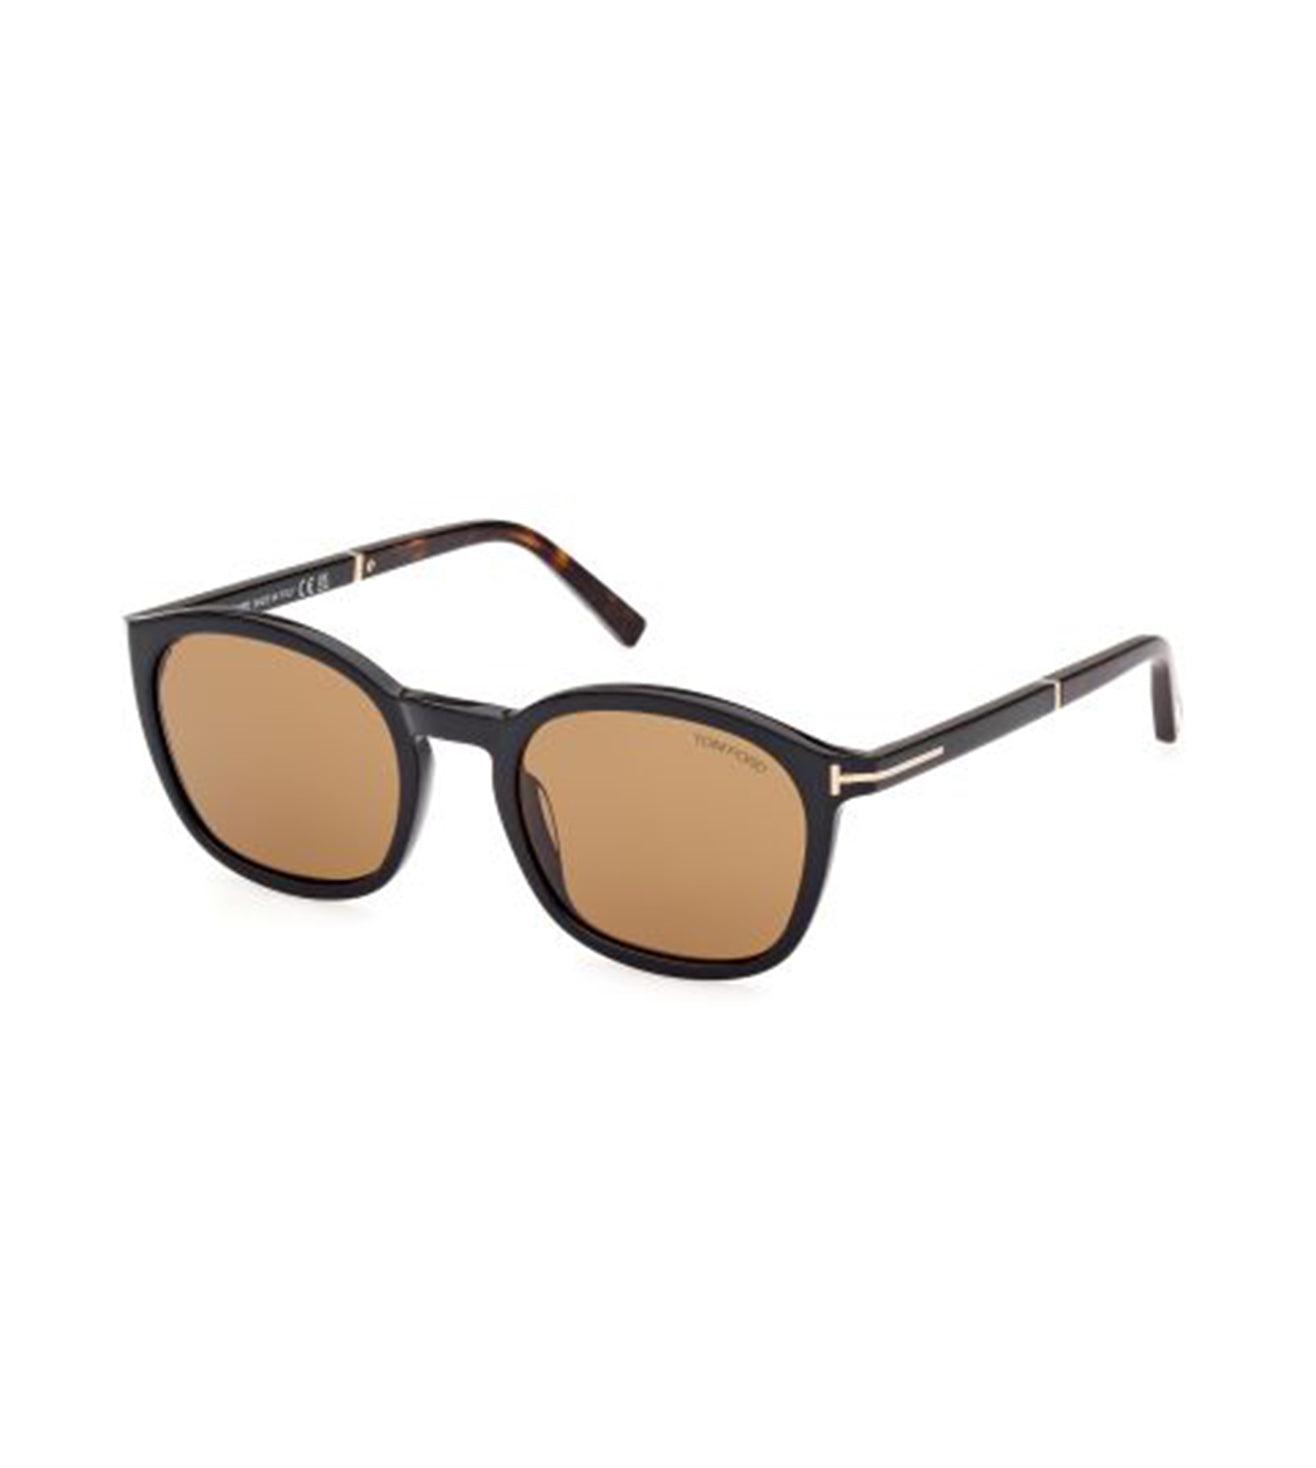 Tom Ford Jayson Men's Brown Square Sunglasses